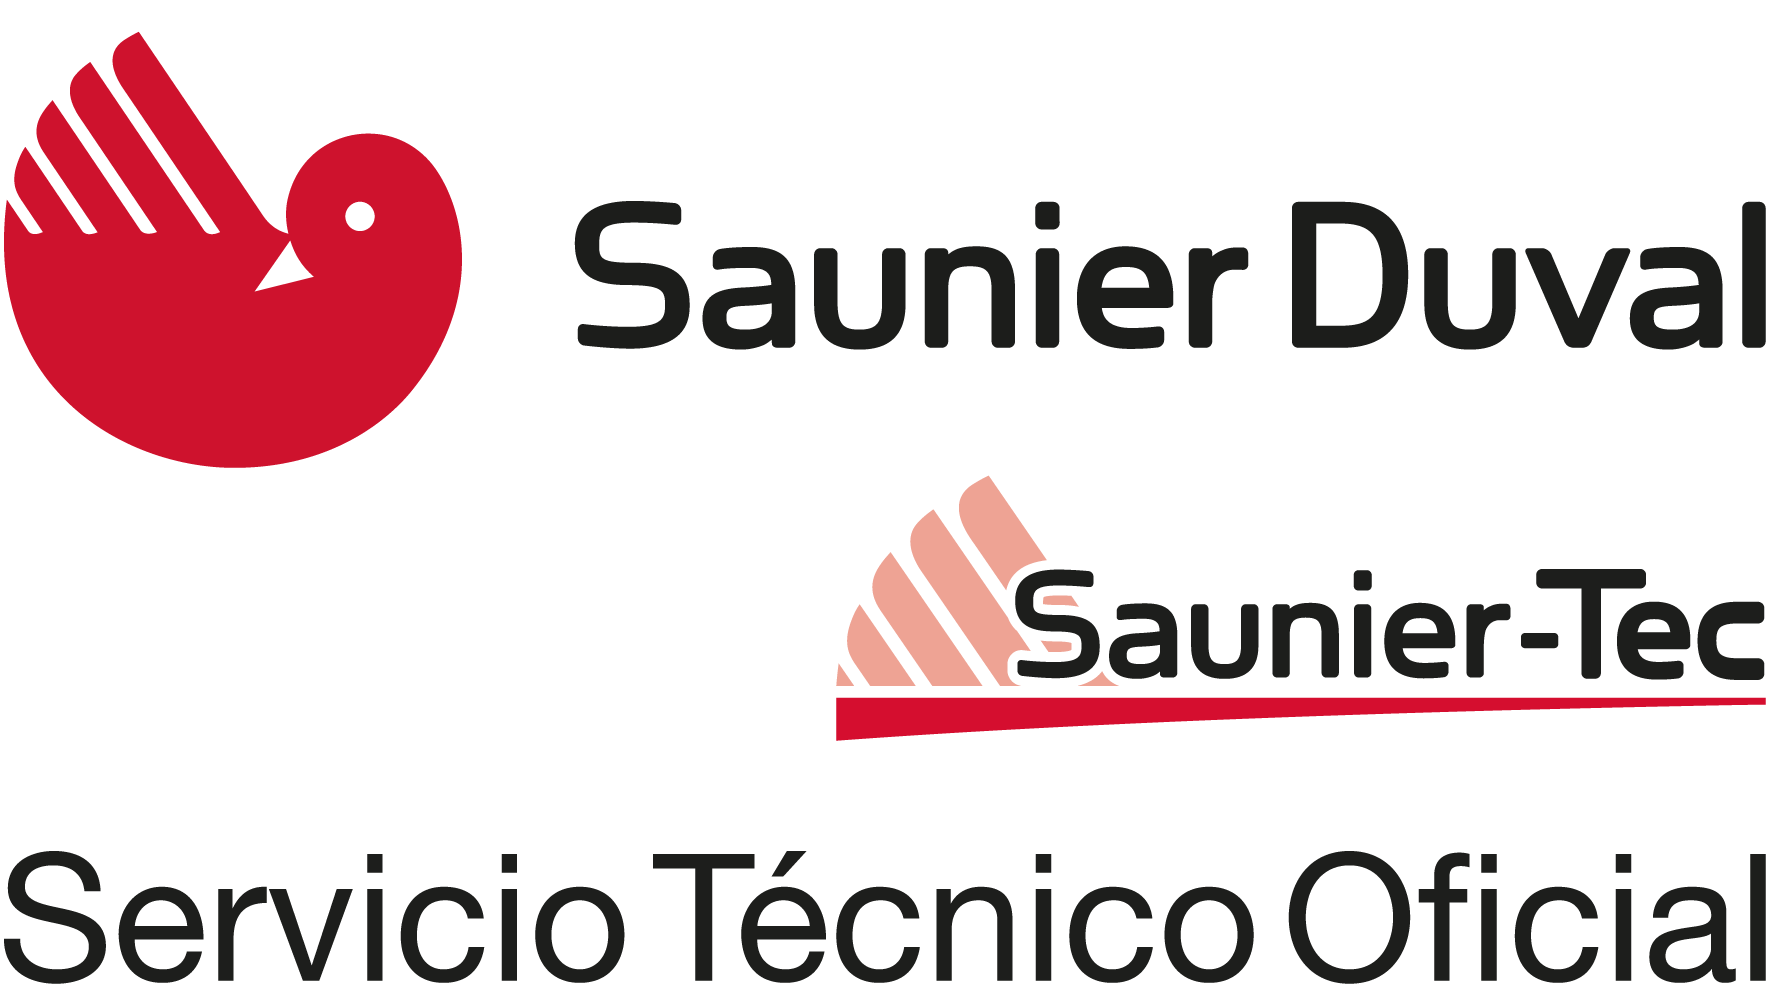 Saunier-Tec